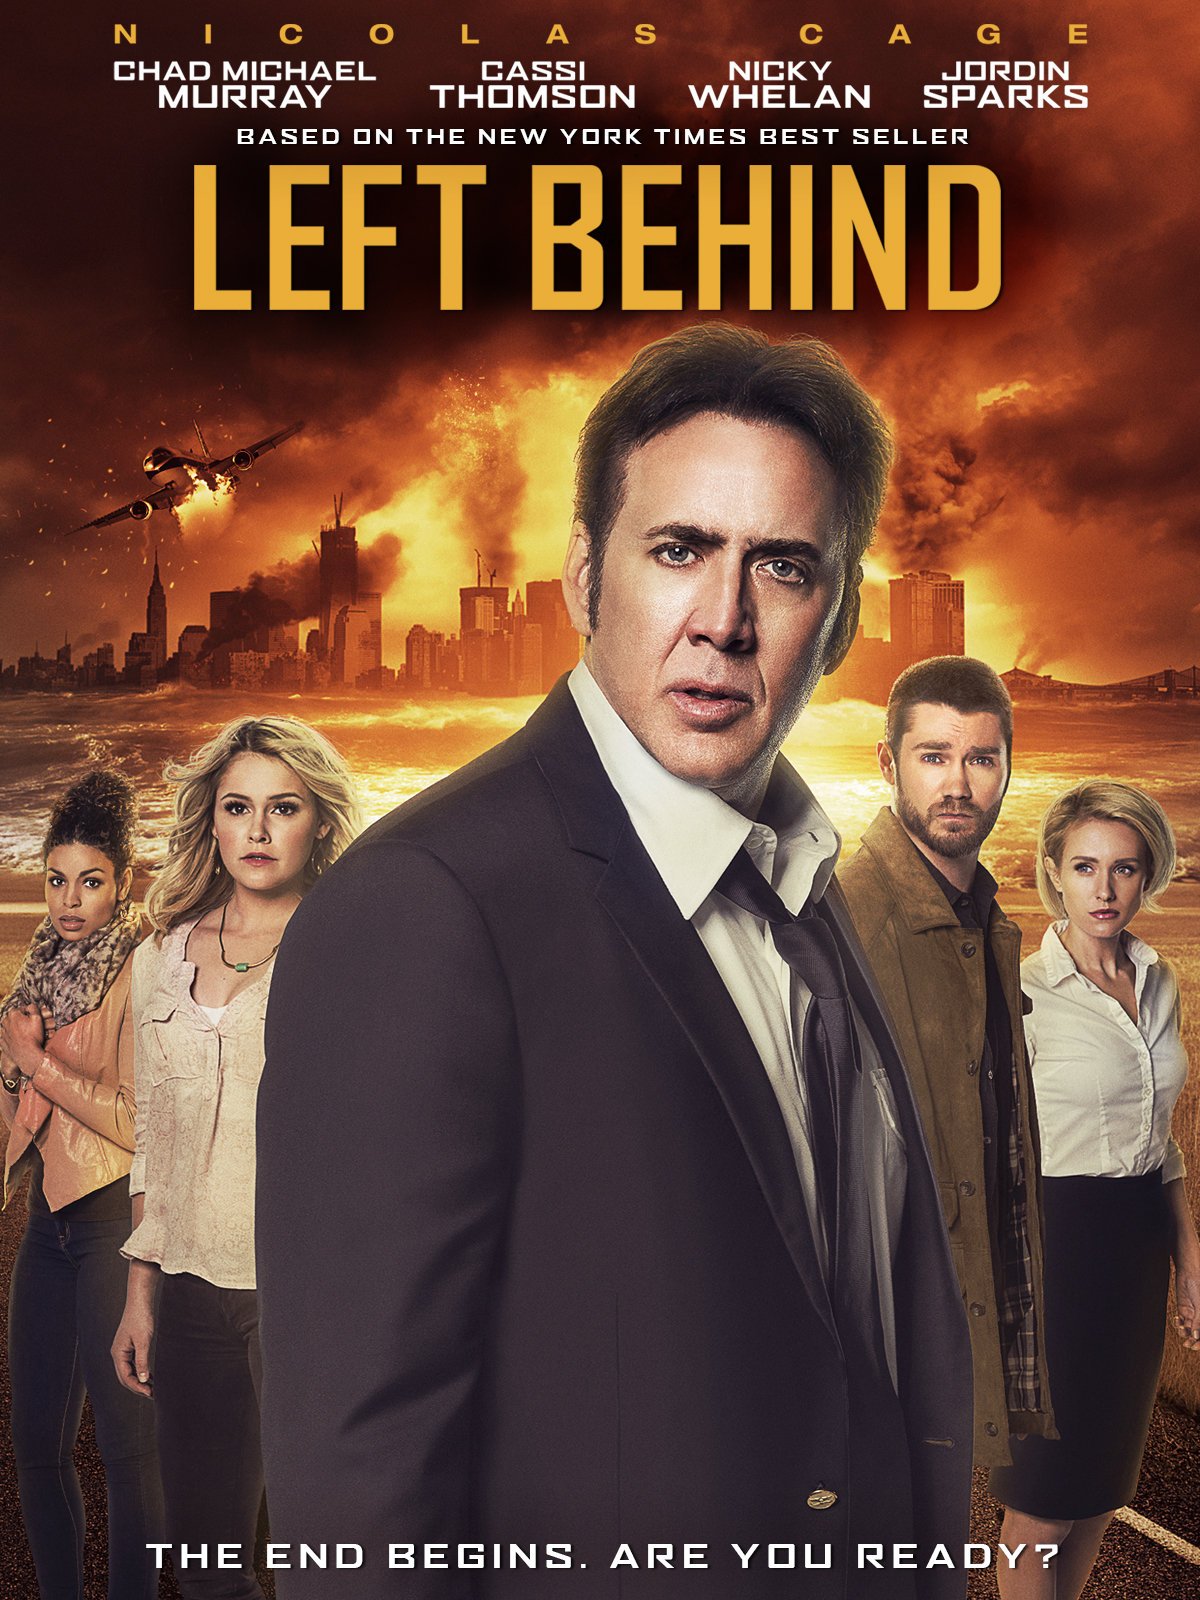 Amazon.com: Left Behind: Nicolas Cage, Lea Thompson, Chad Michael ...